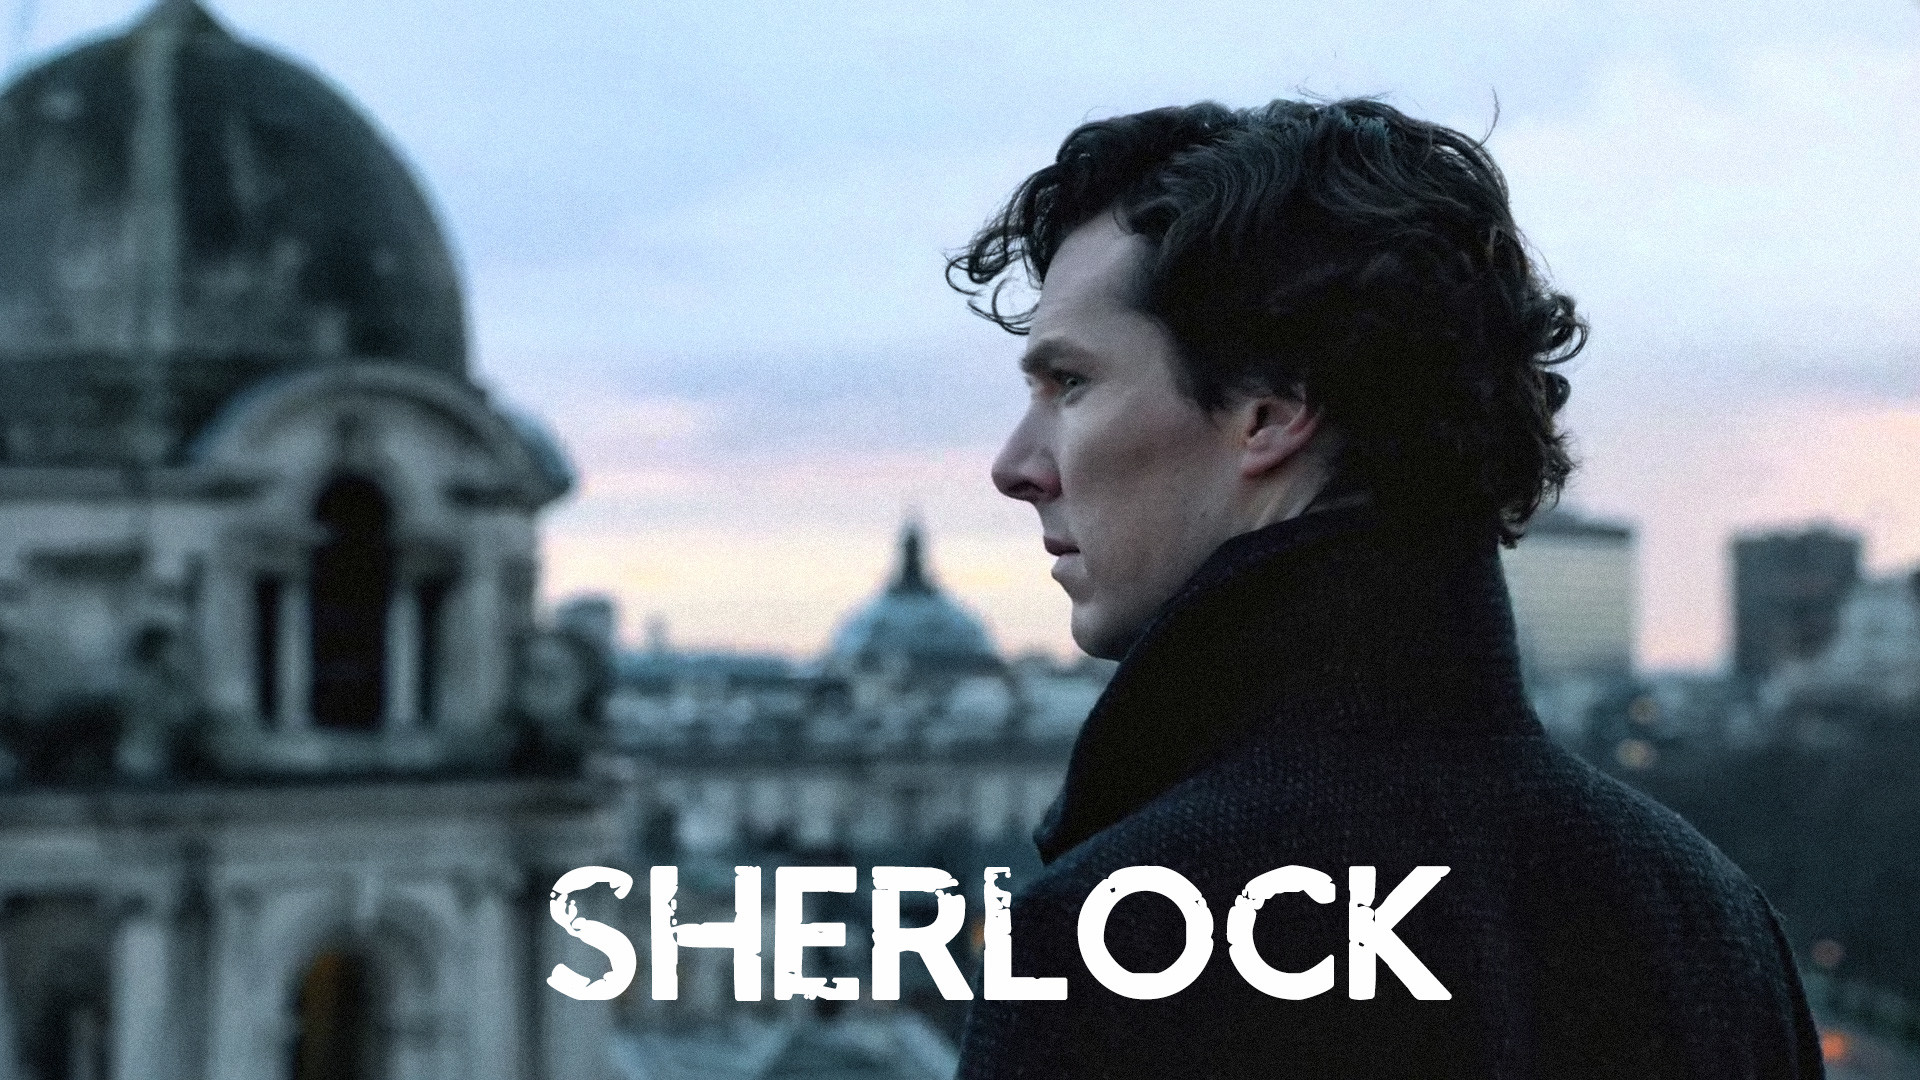 Benedict Cumberbatch Sherlock Wallpaper Image